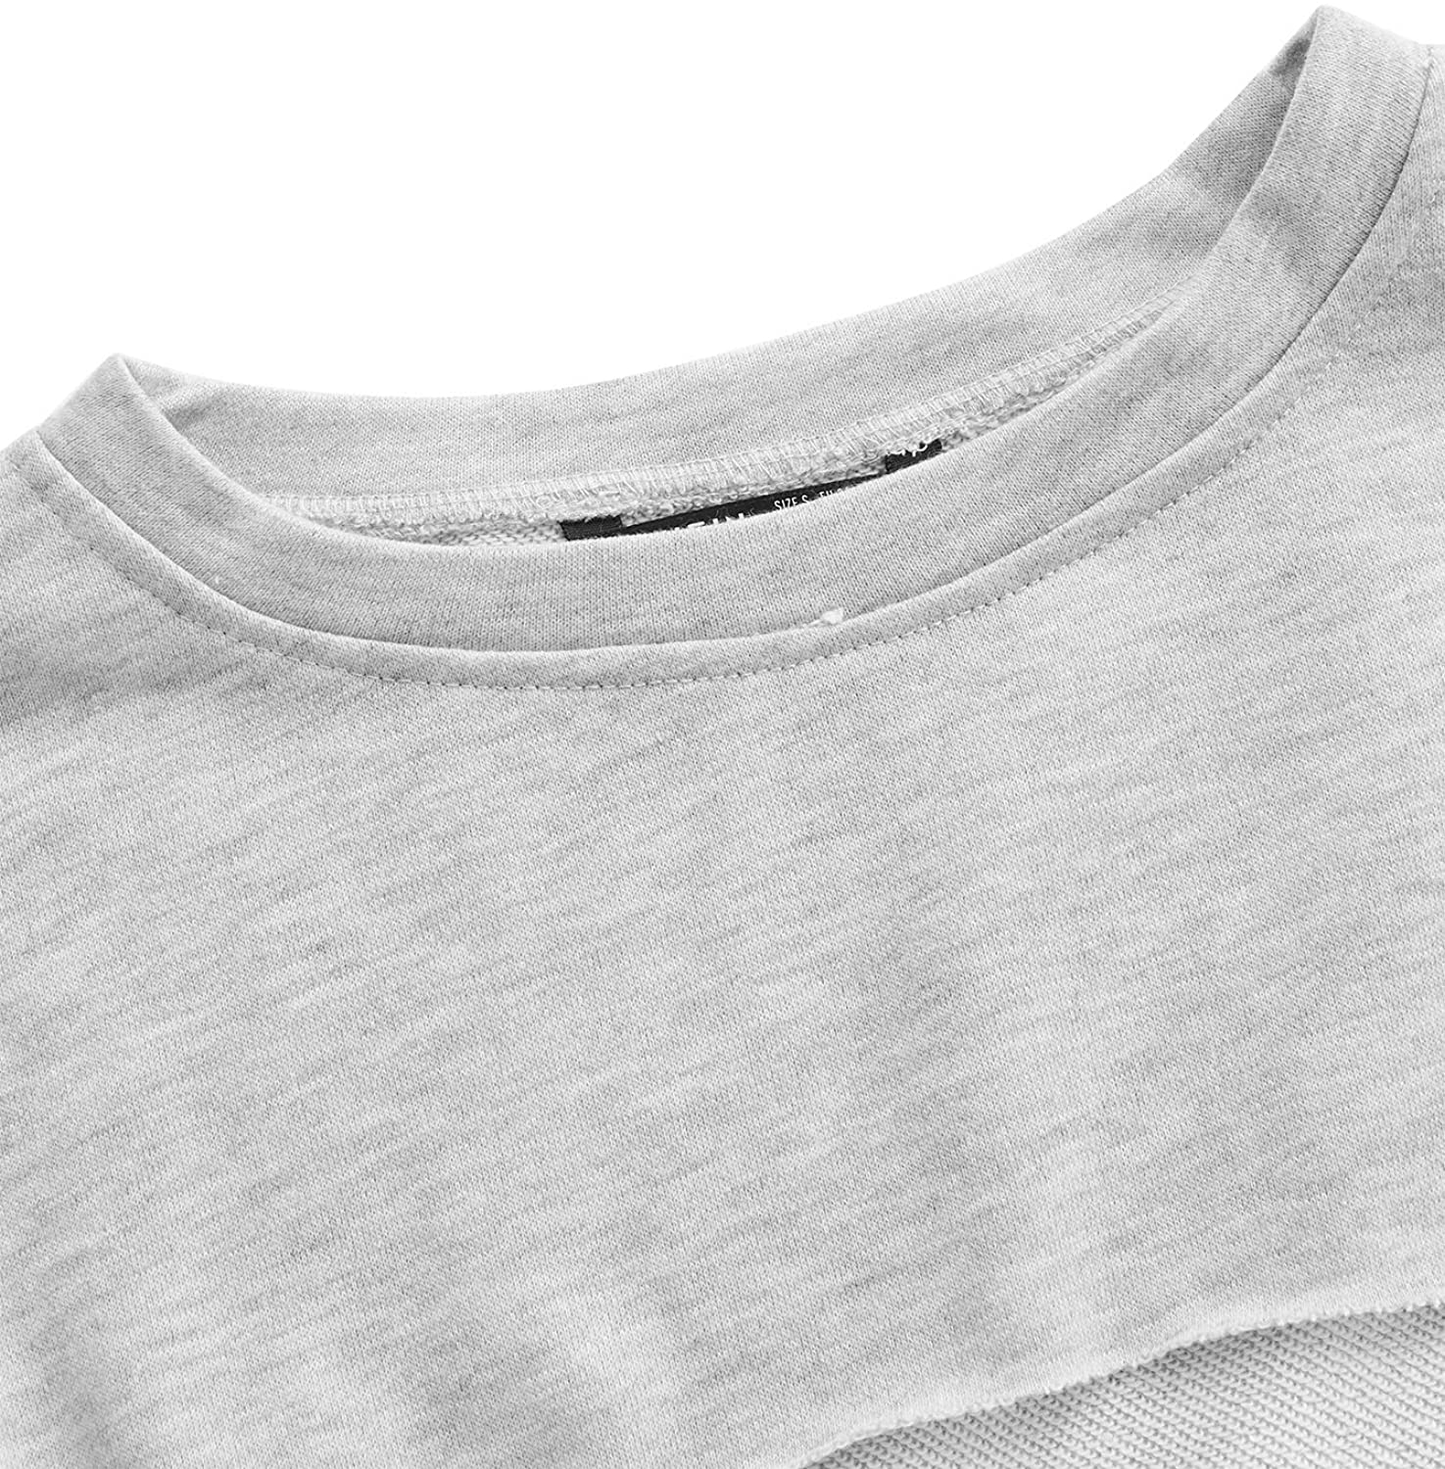 SweatyRocks Women's Casual Solid Cut Out Front Long Sleeve Pullover Crop Top Sweatshirt